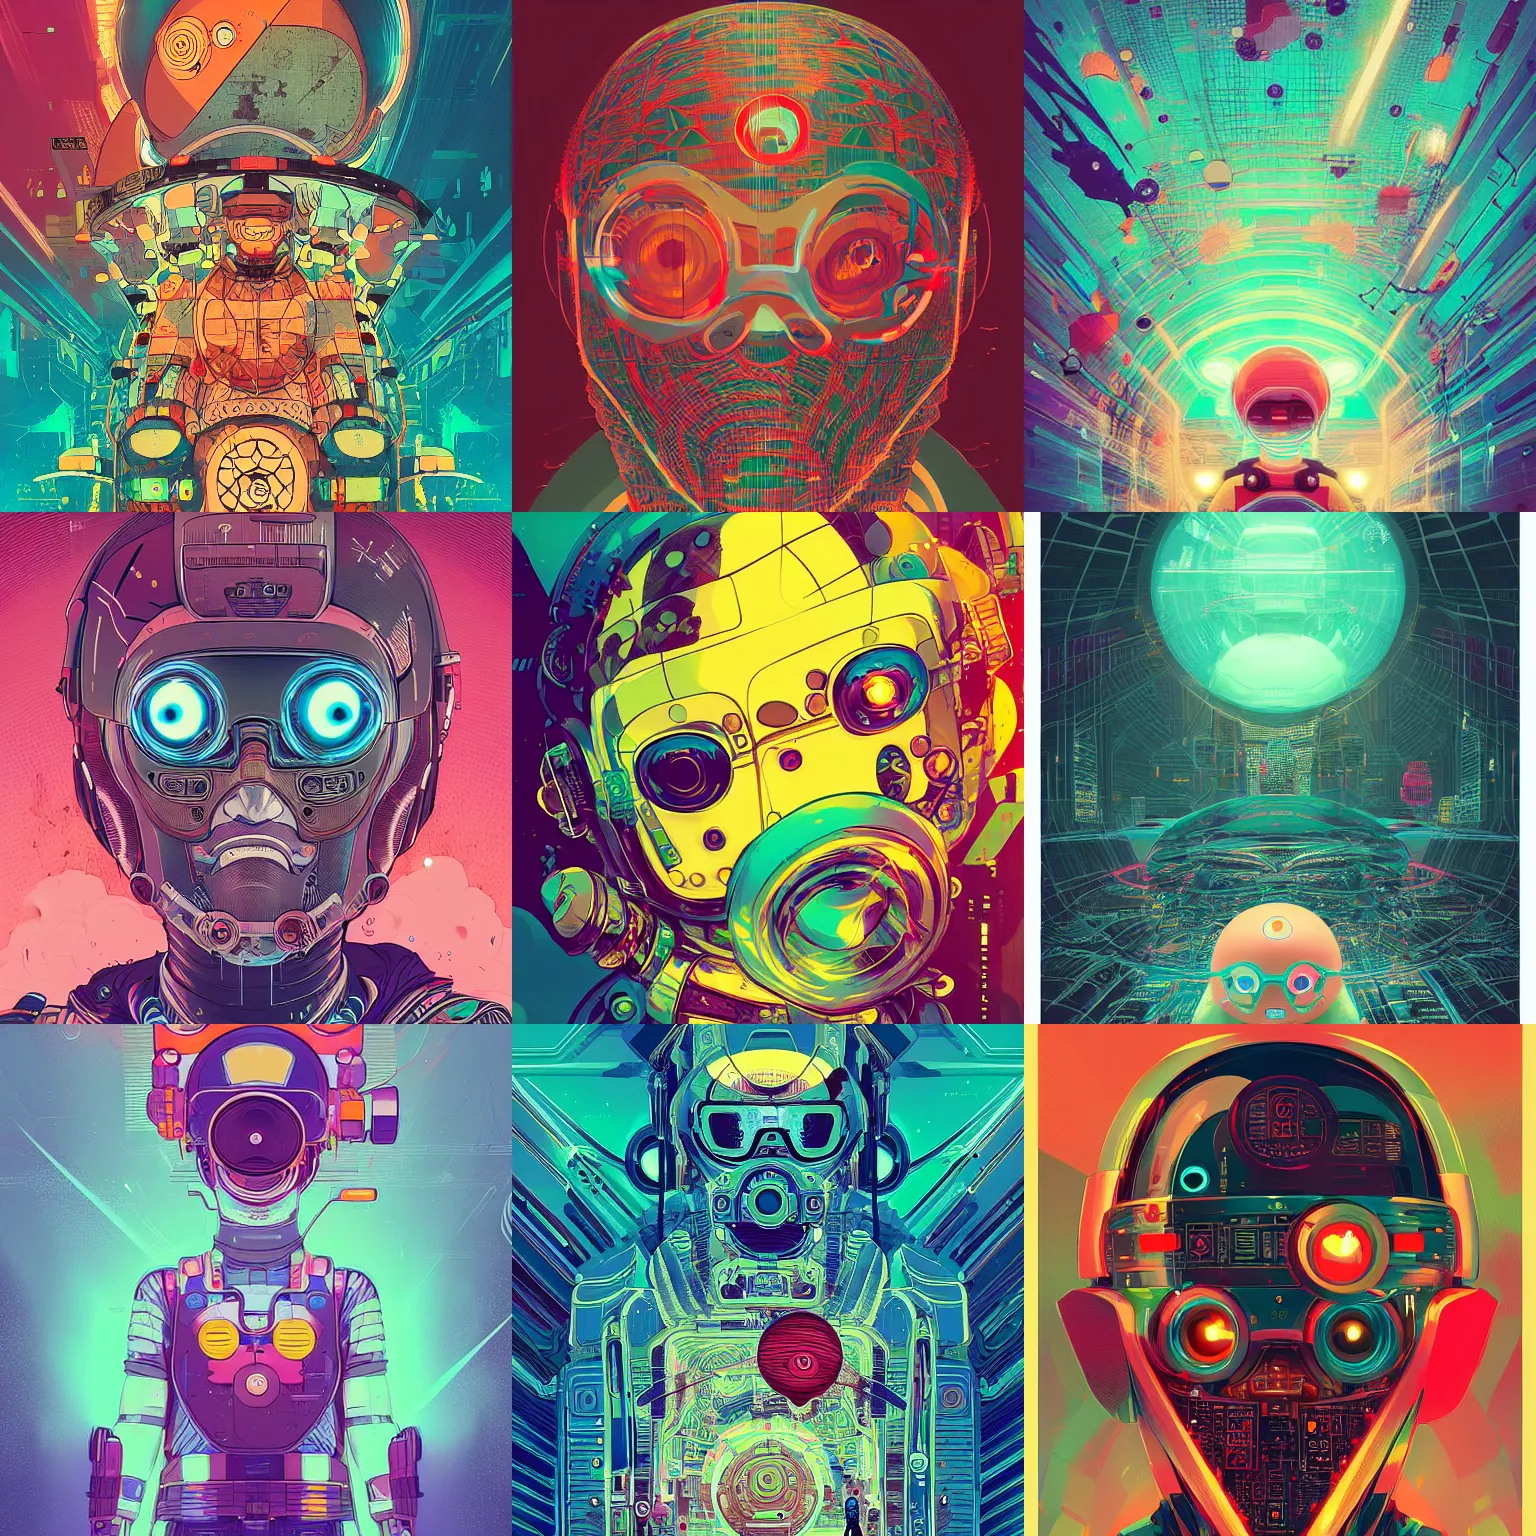 Prompt: cyberpunk art, futuristic product design, by petros afshar takashi murakami victo ngai akira toriyama, behance contest winner, featured on pixiv, neoplasticism, pop surrealism, serial art